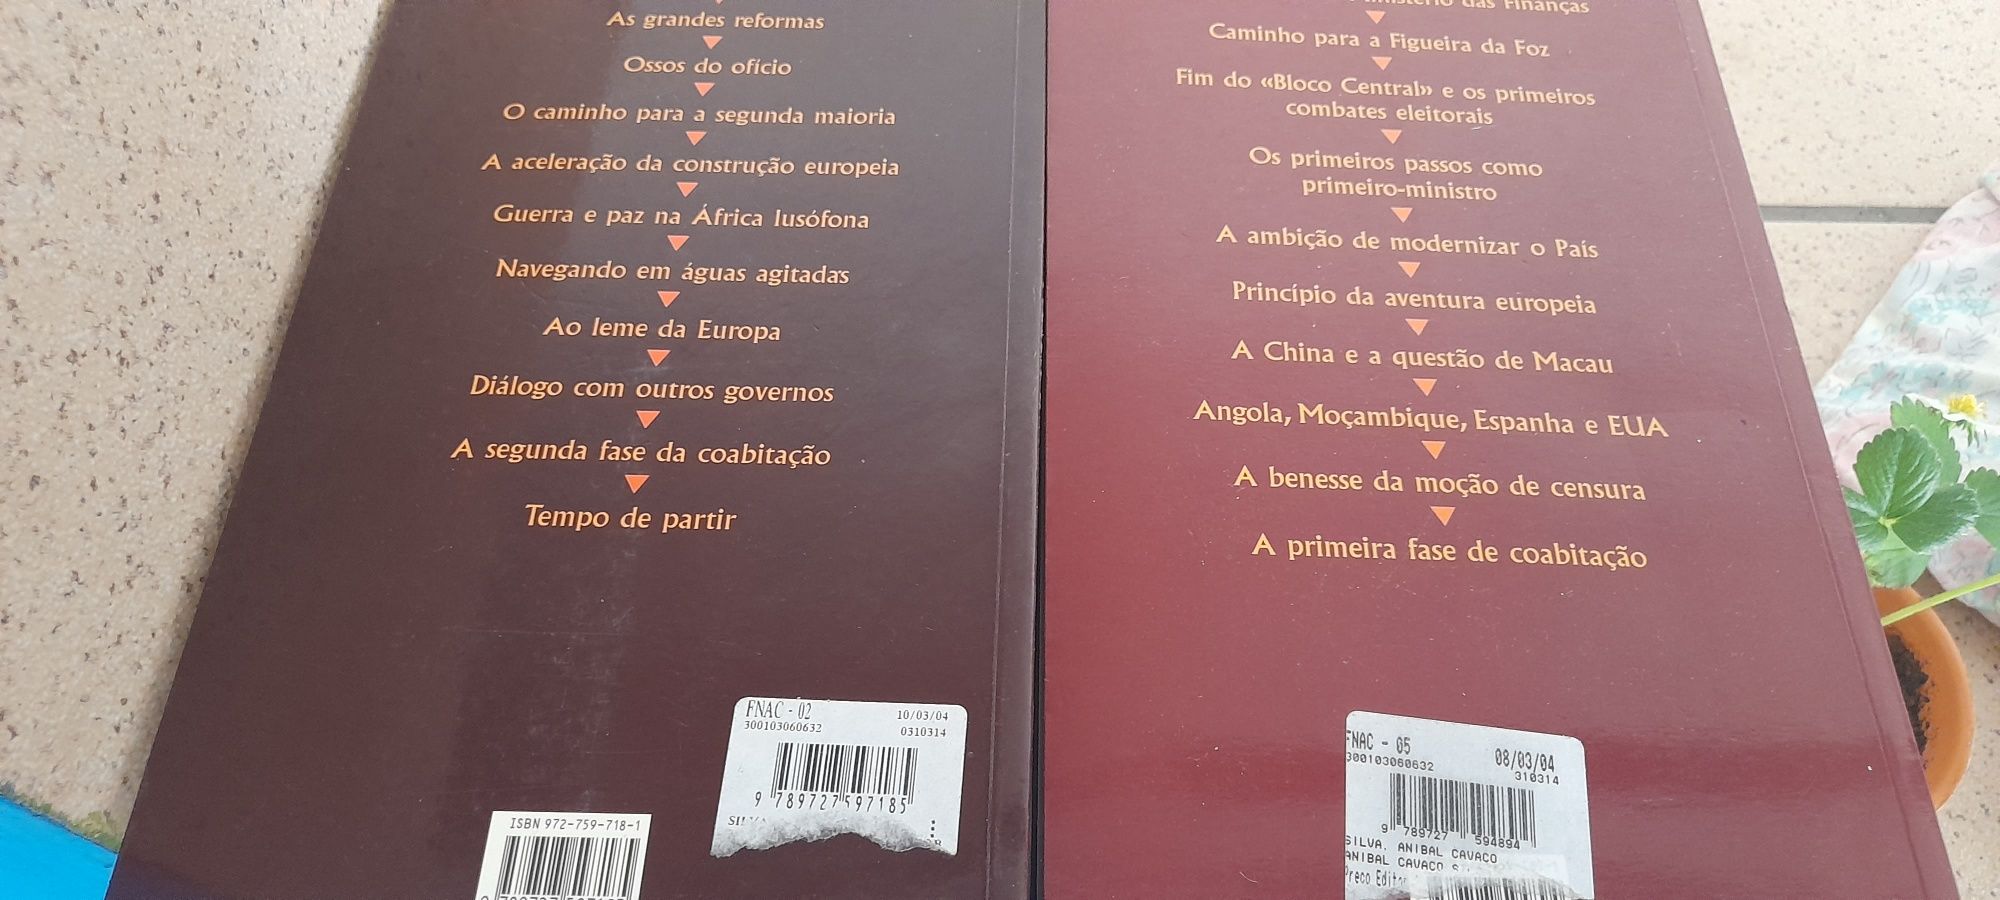 Cavaco Silva 2 volumes